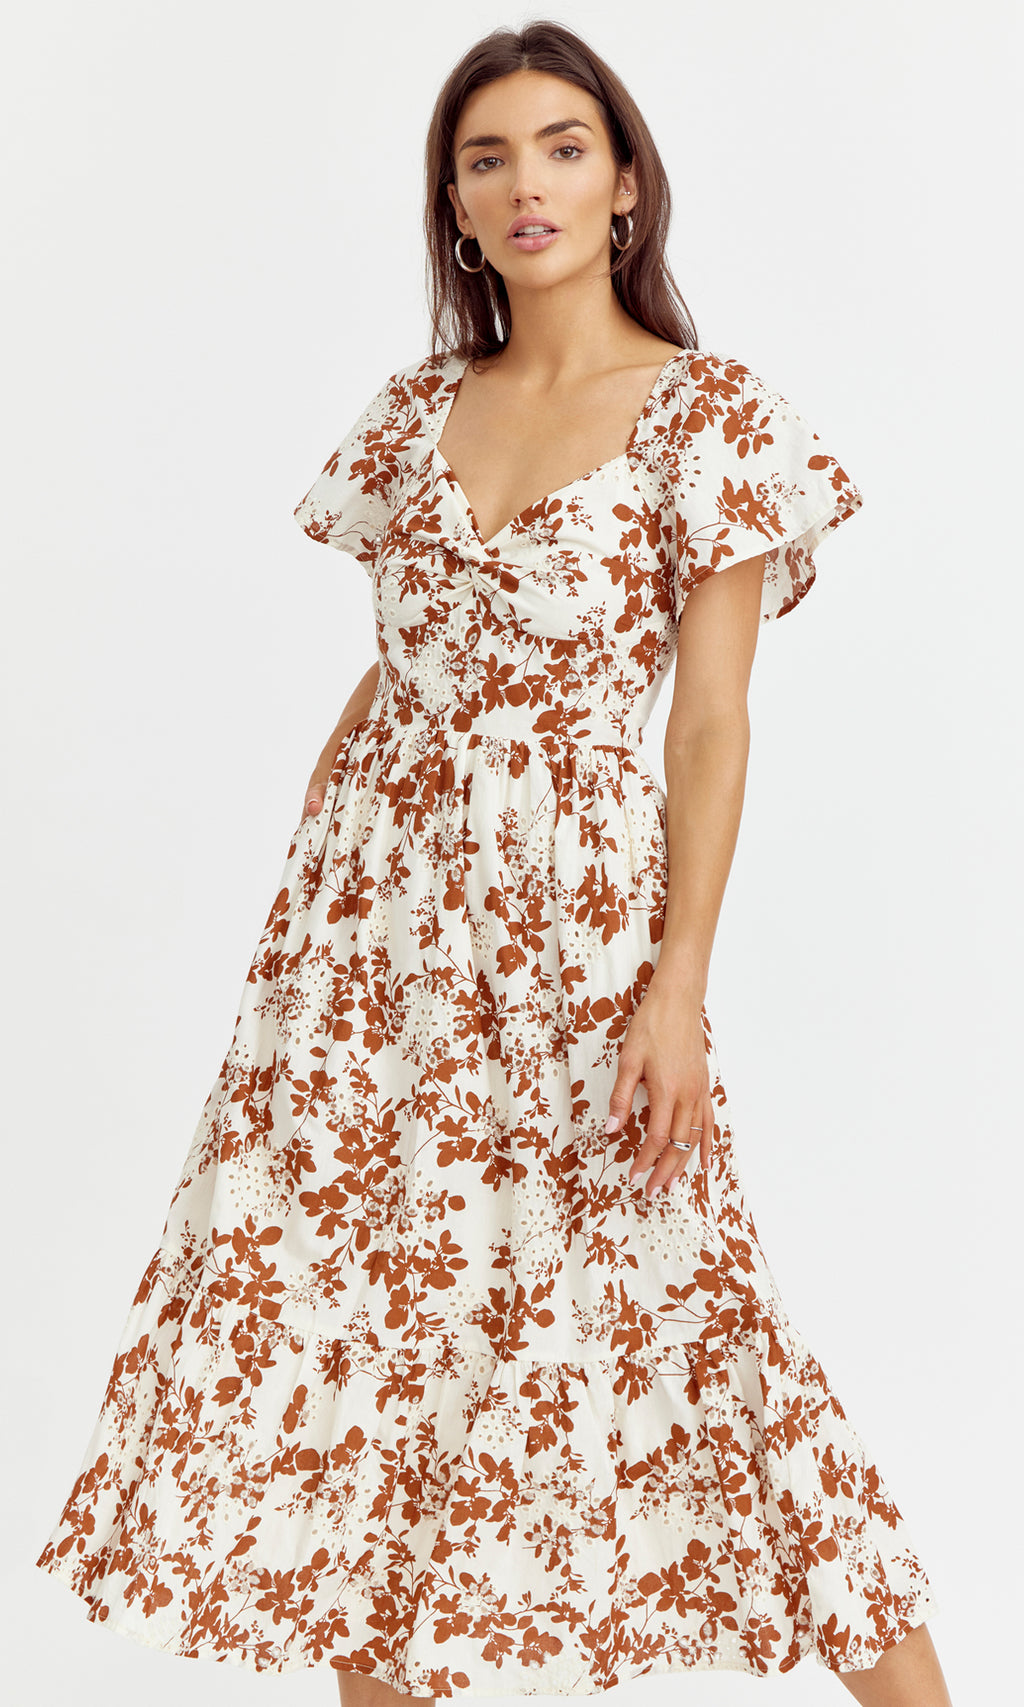 Greylin Trexx Embroidered Cotton Dress in Cream/Rust